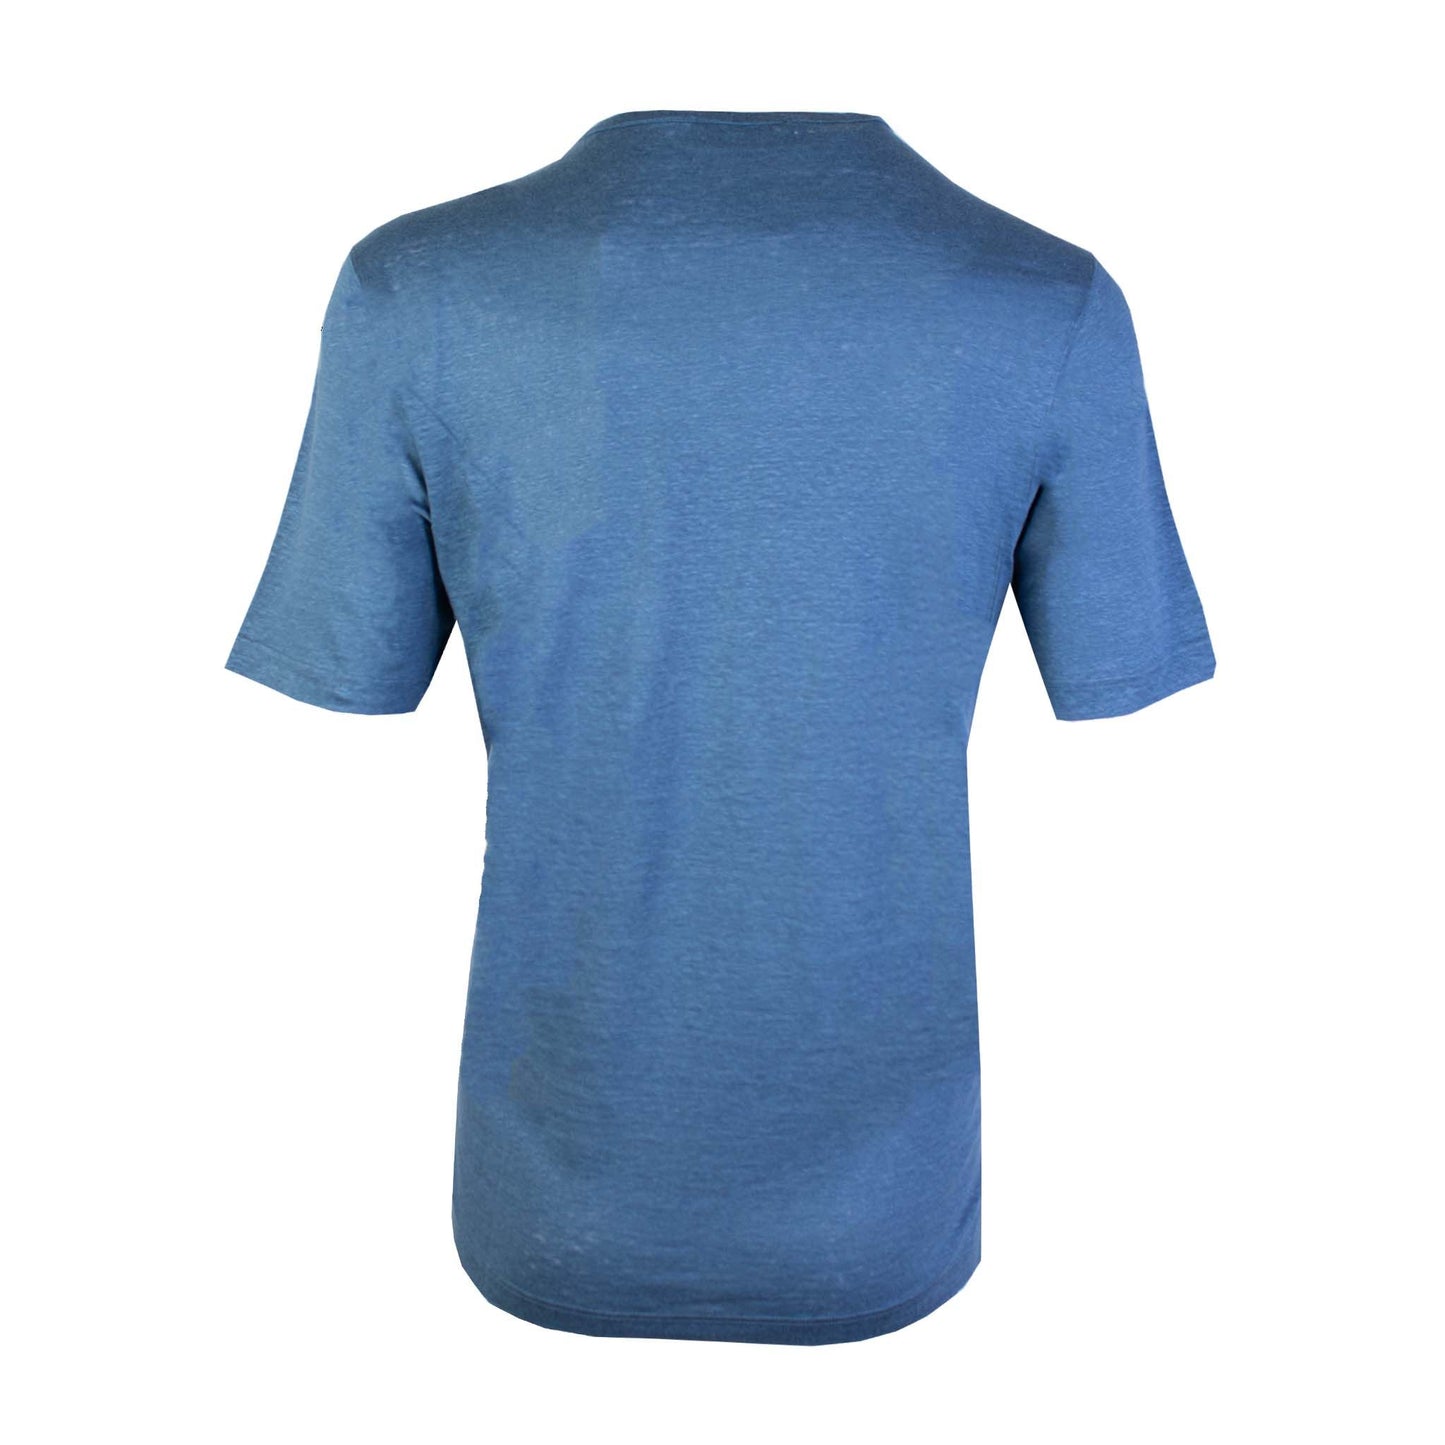 Lardini Blended Wool Powder Blue T-Shirt